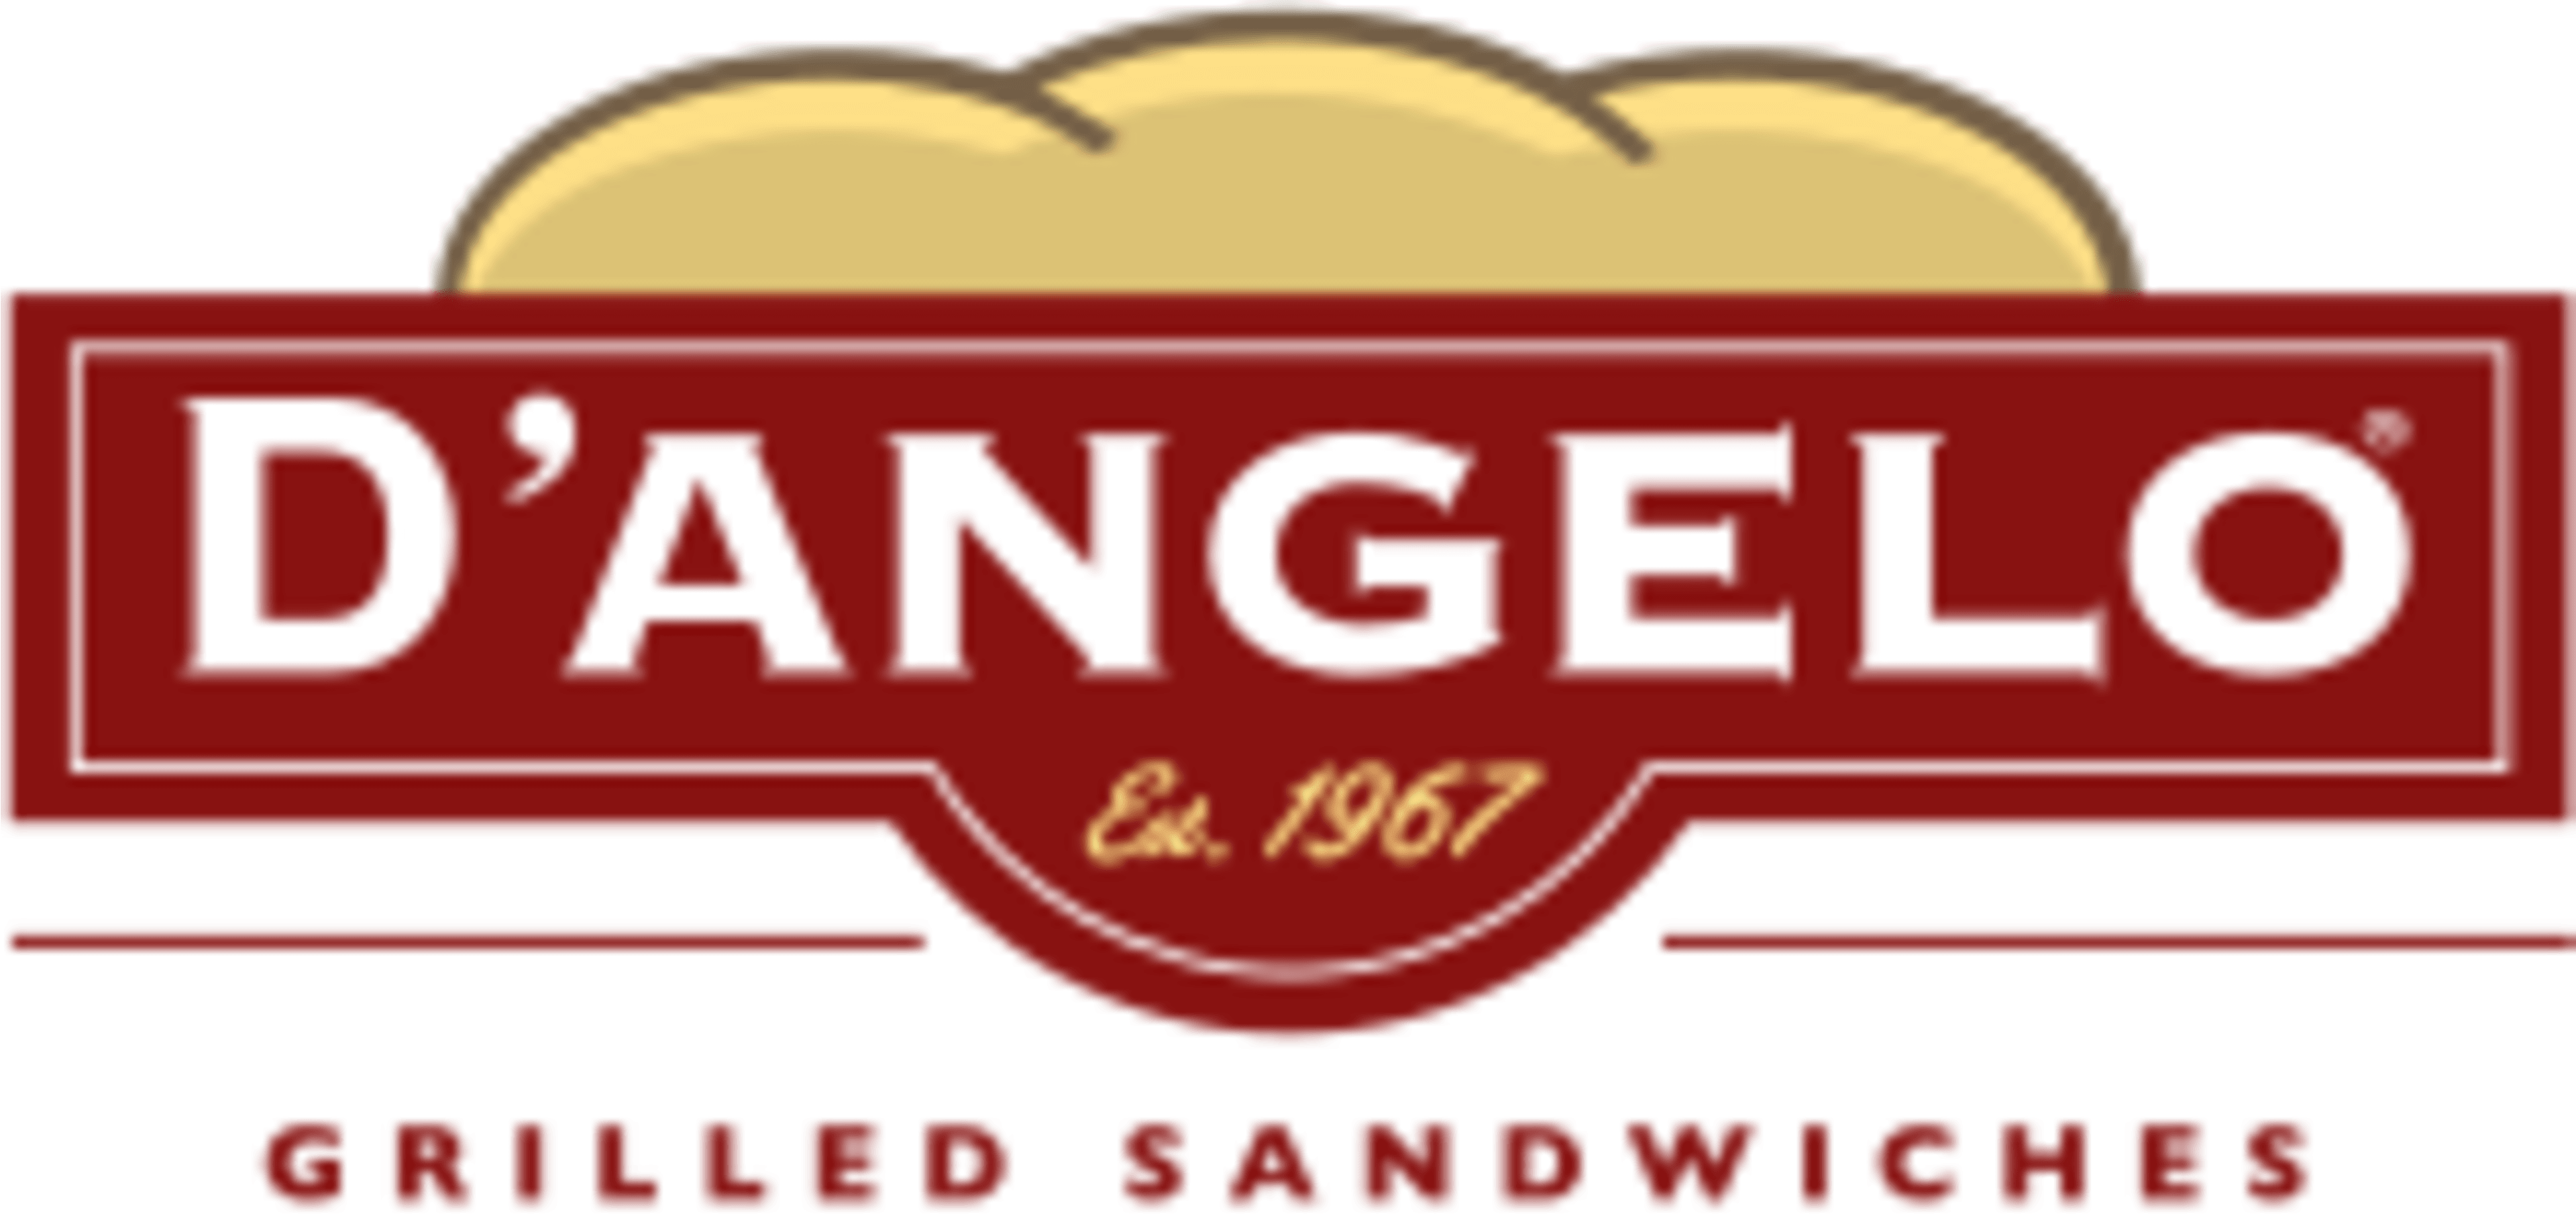 D'Angelo Sandwich Code